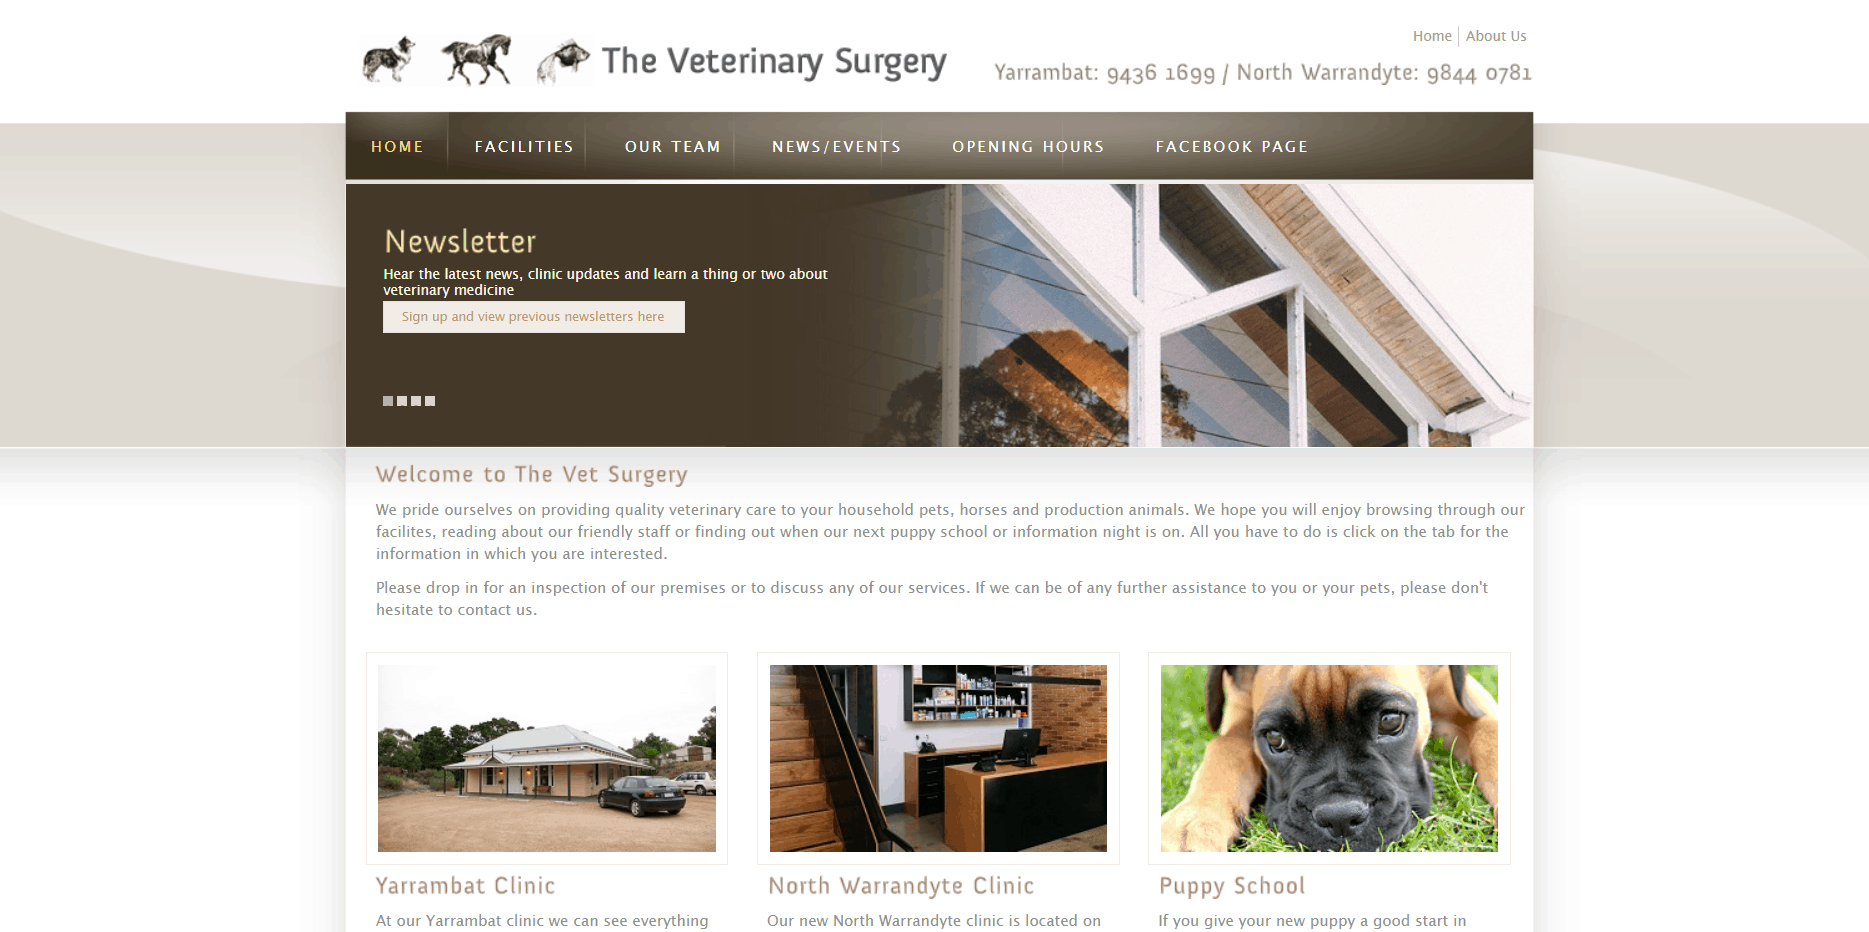 The Veterinary Surgery